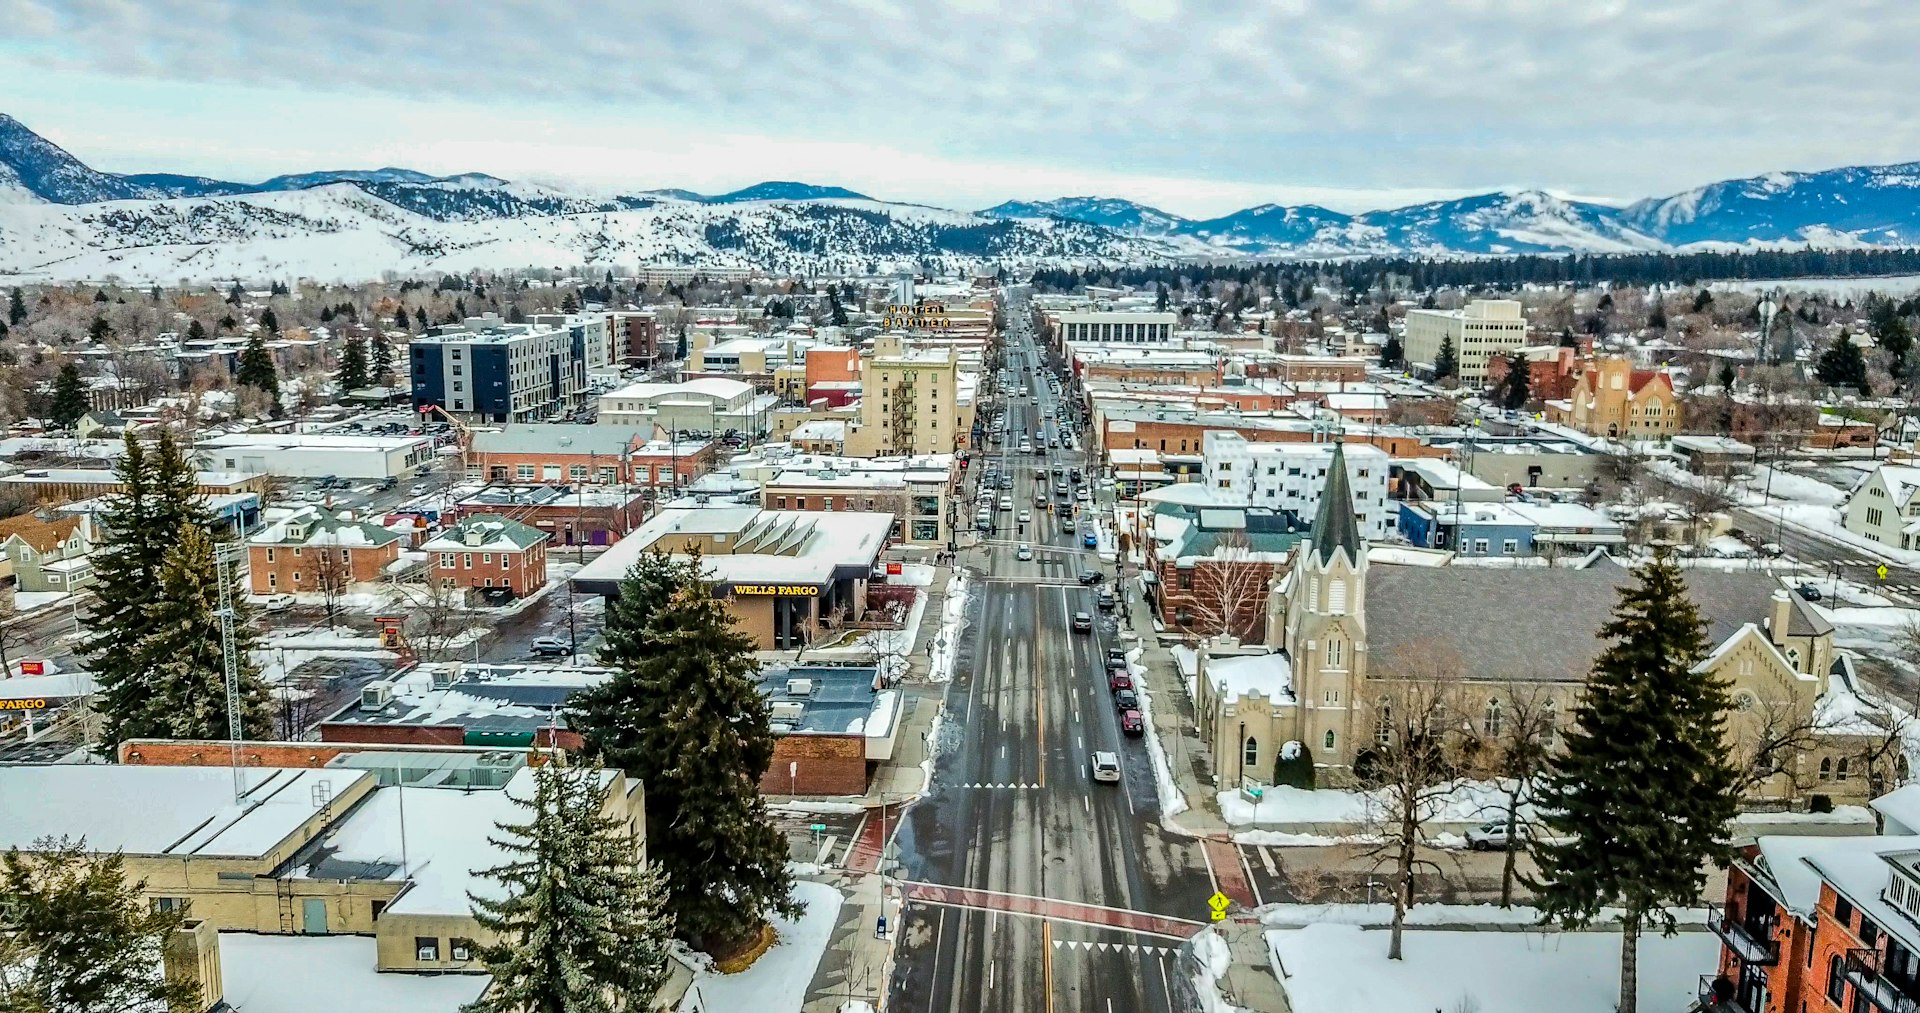 Winter view along Main Street in Bozeman, Montana